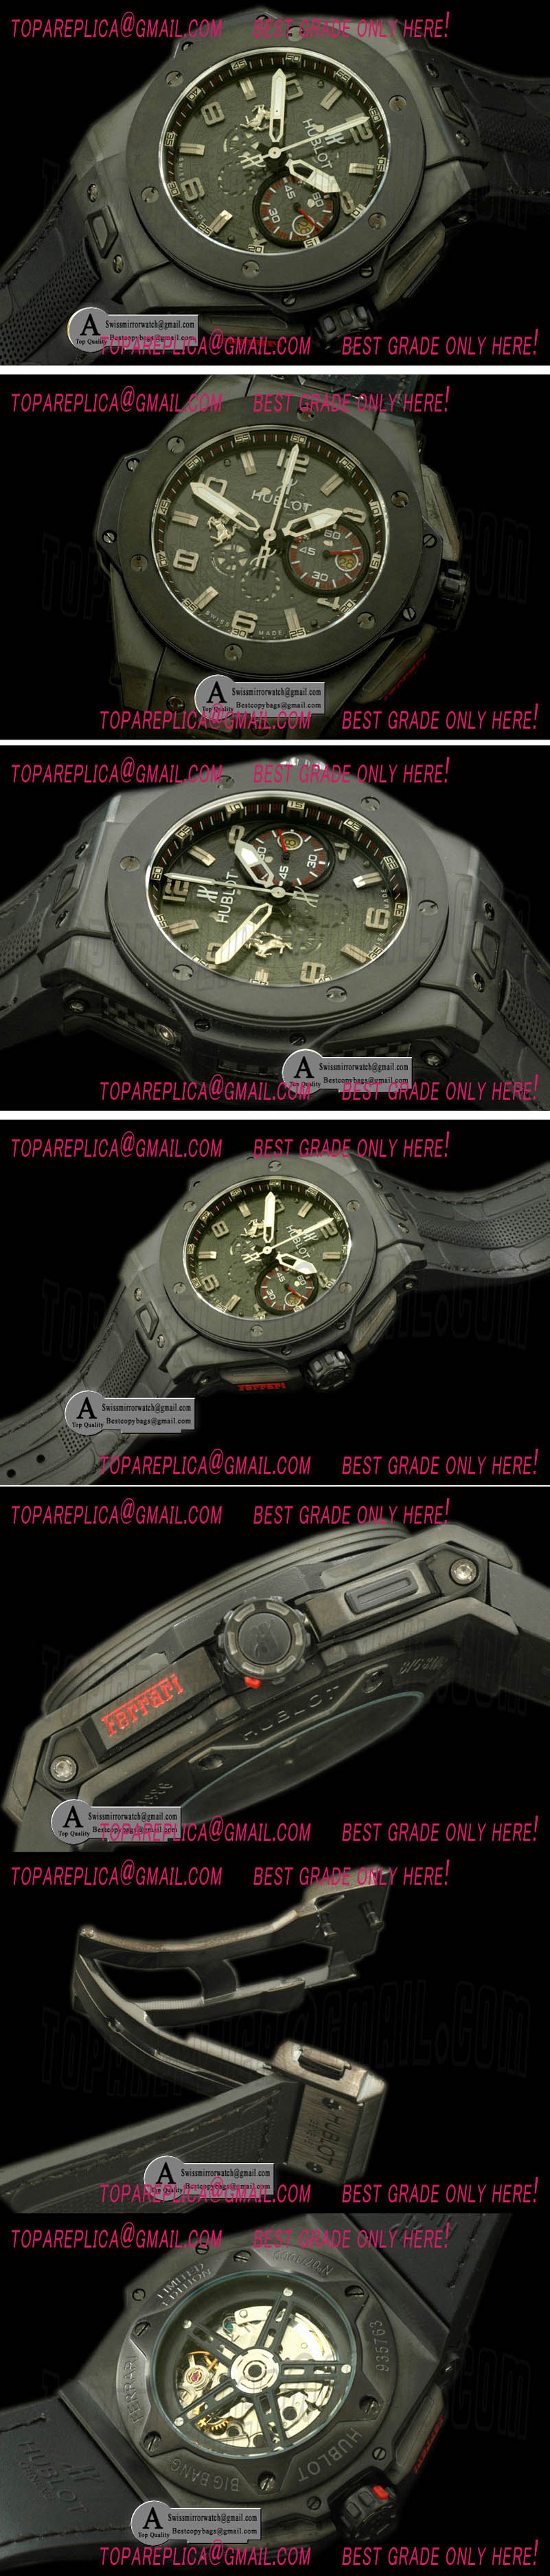 Replica Hublot Ferrari Limited Edtions Watches